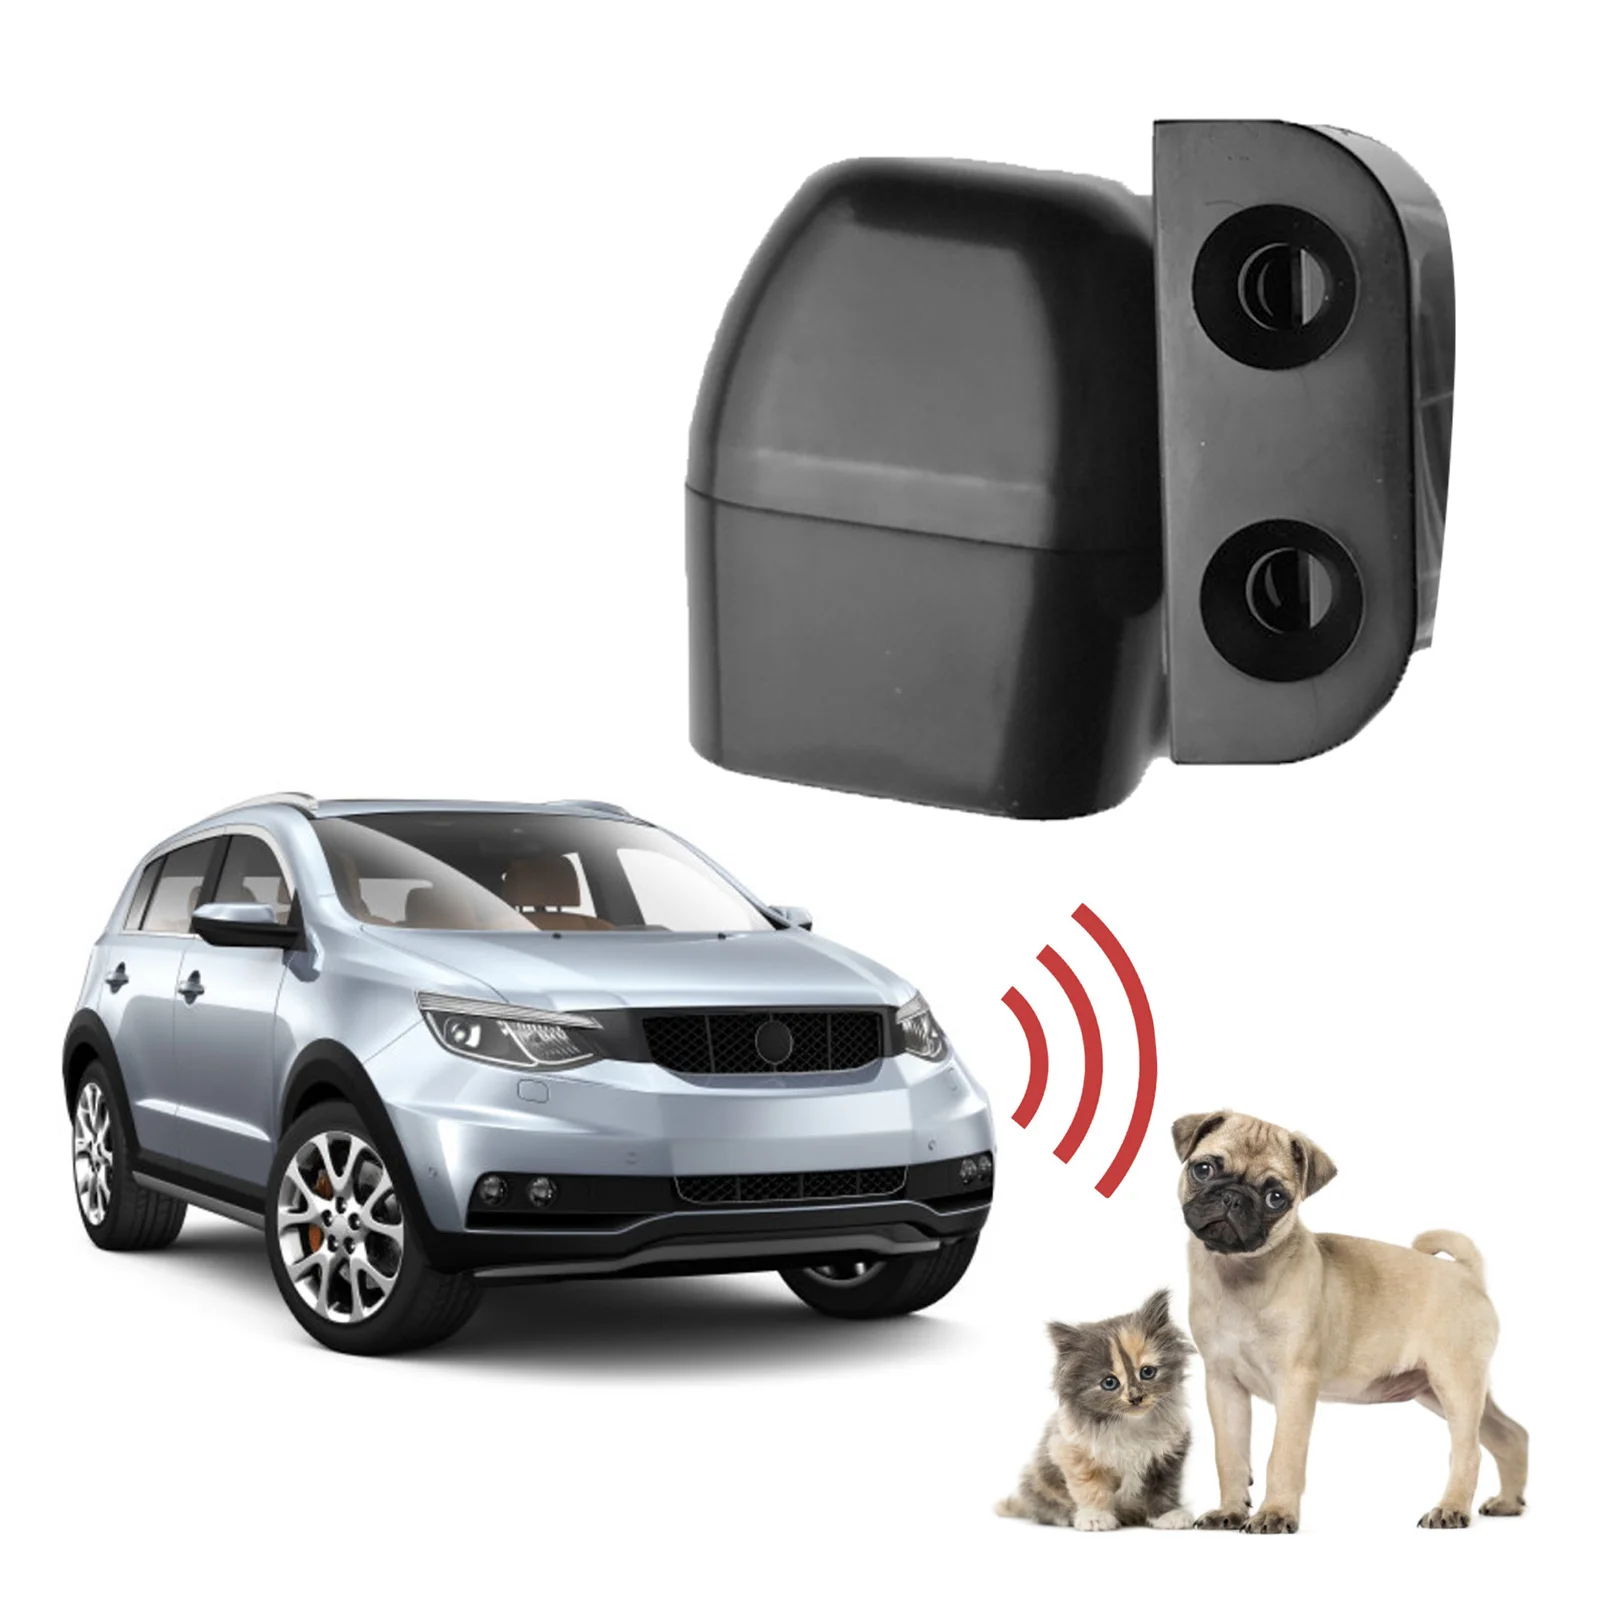 

2pcs Animal Whistle Repeller Alert Deer Car Grille Mount Auto Ultrasonic Whistles Safety Sound Alarm Black Sonic Gadgets